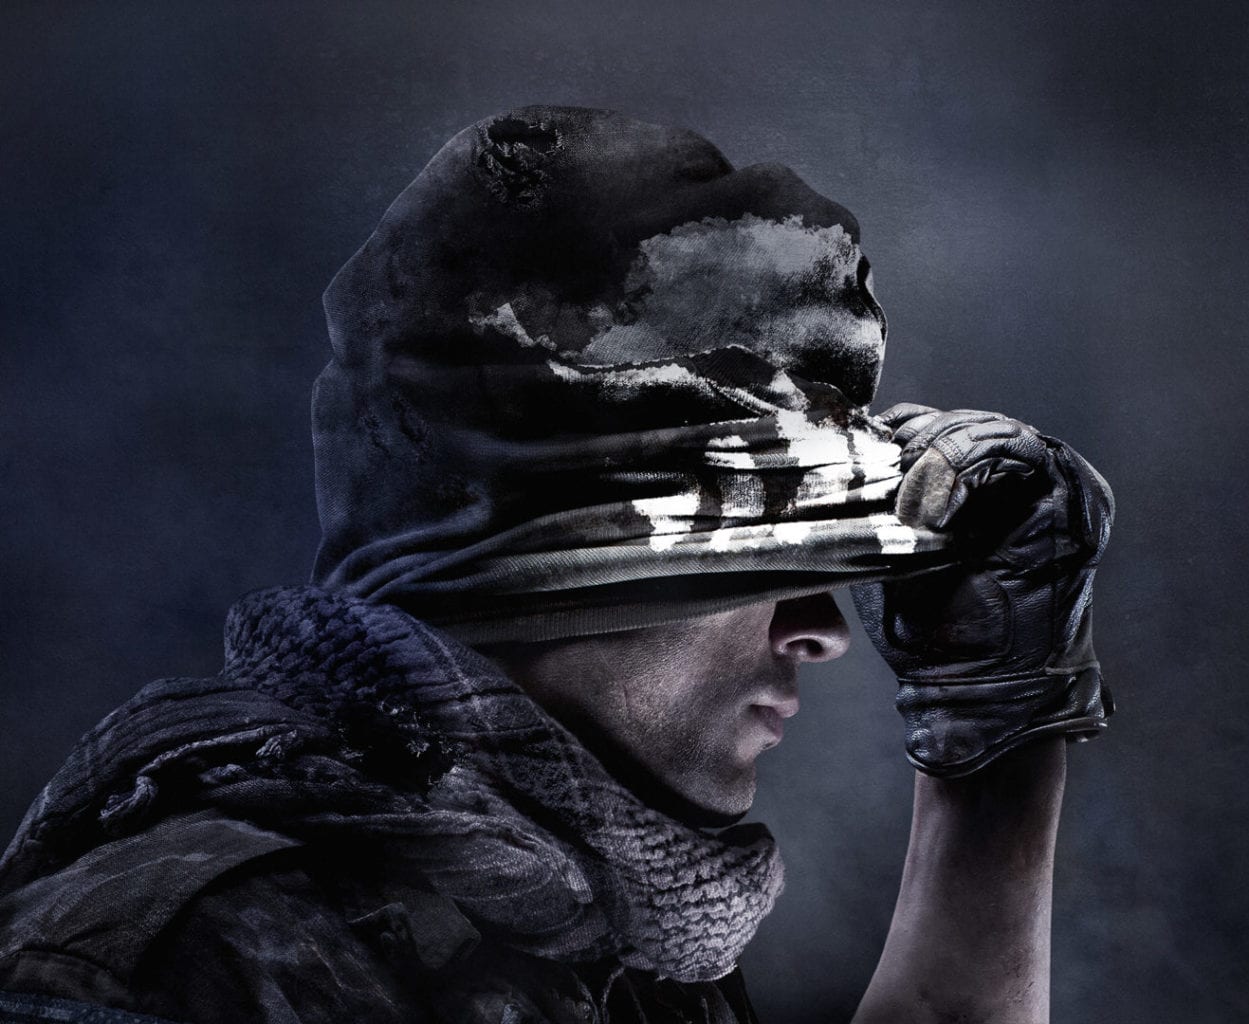 Call of Duty: Ghosts 2, Call of Duty Fan Fiction Wiki